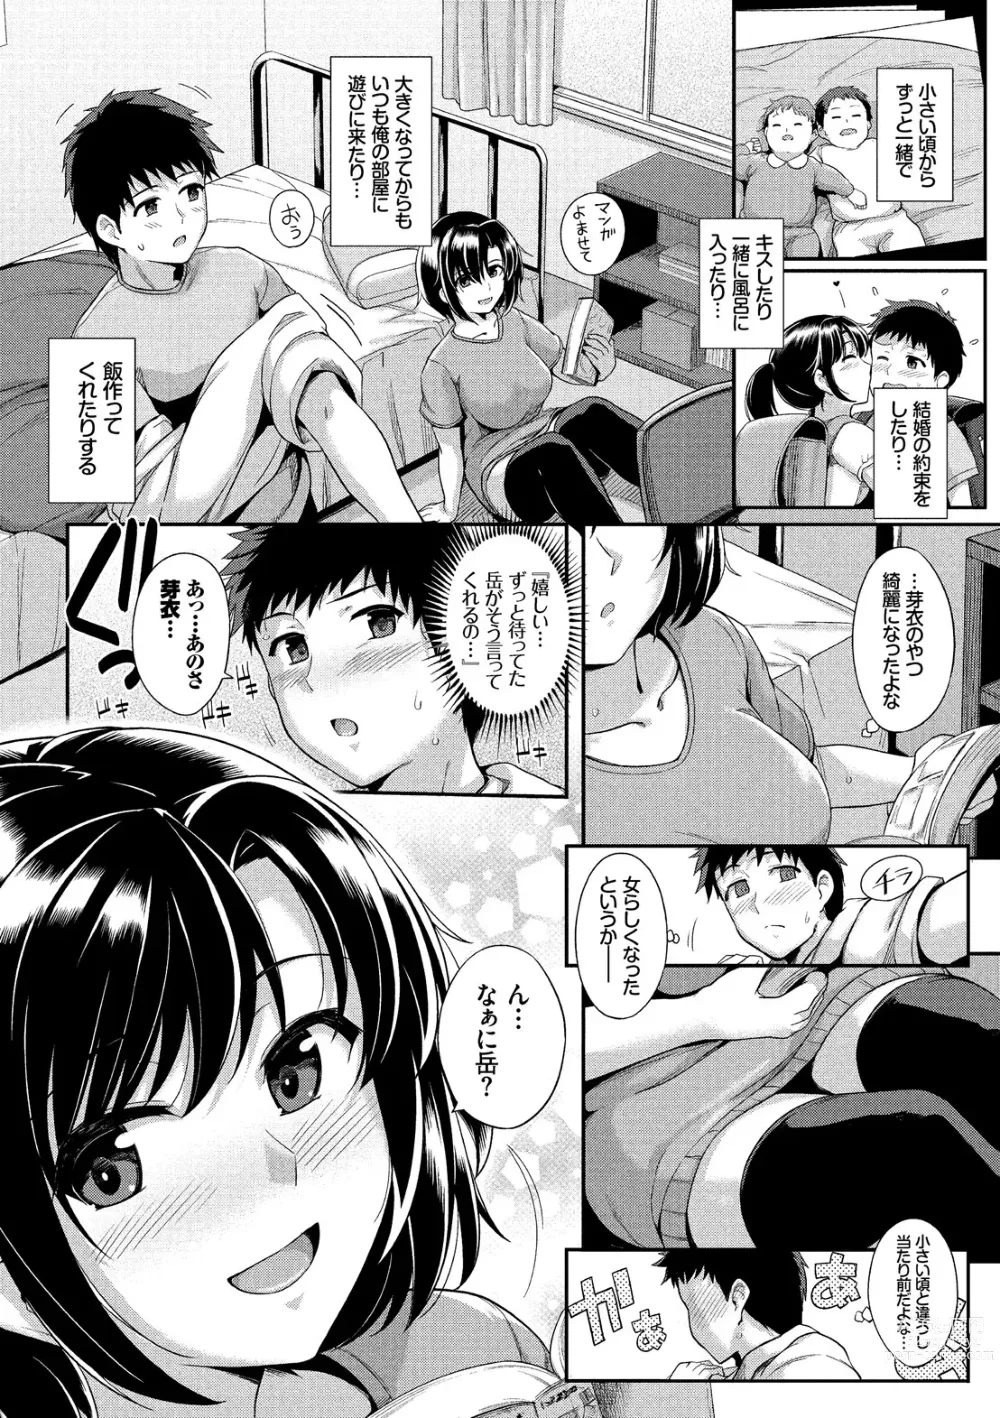 Page 8 of manga Hatsukoi Chocolat - first love chocolate